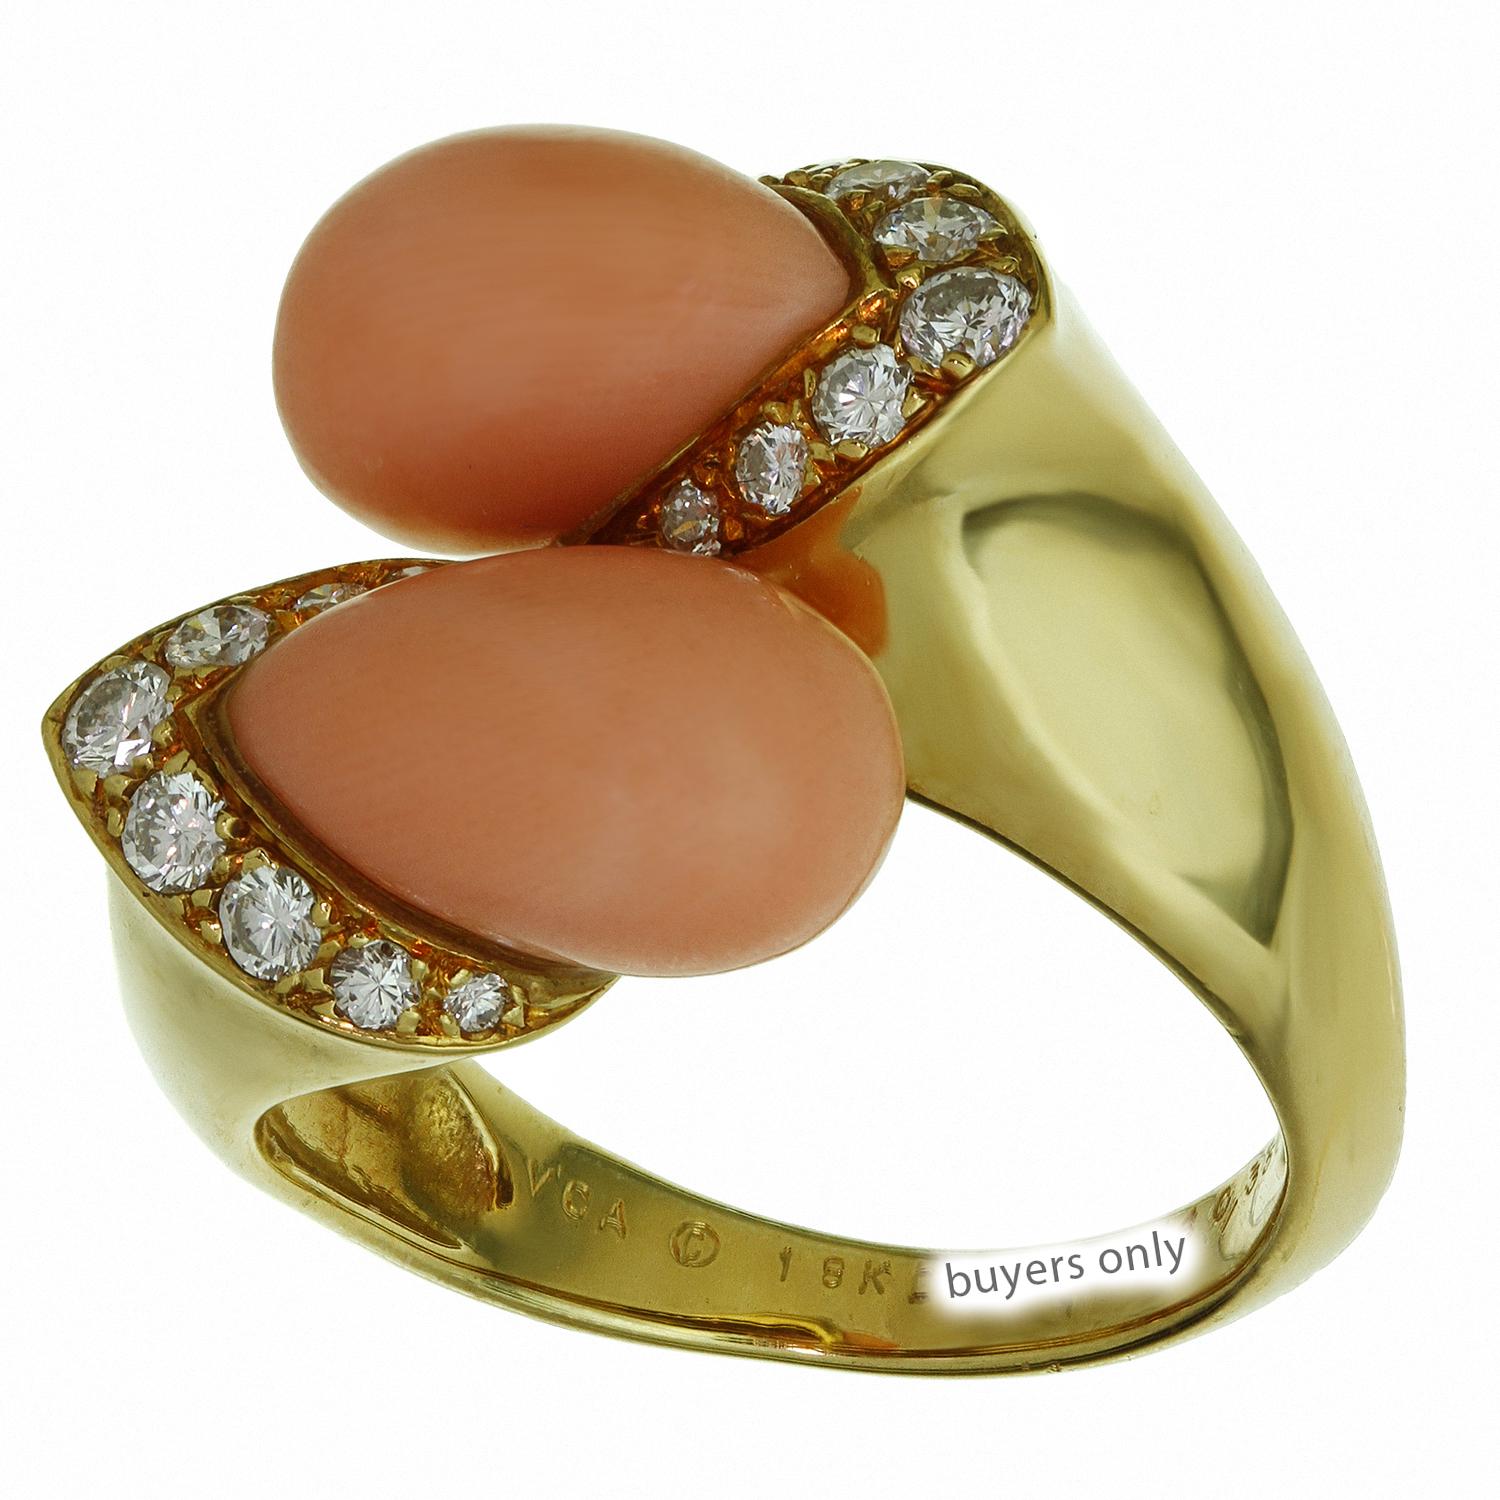 Brilliant Cut Van Cleef & Arpels Diamond Coral Yellow Gold Ring